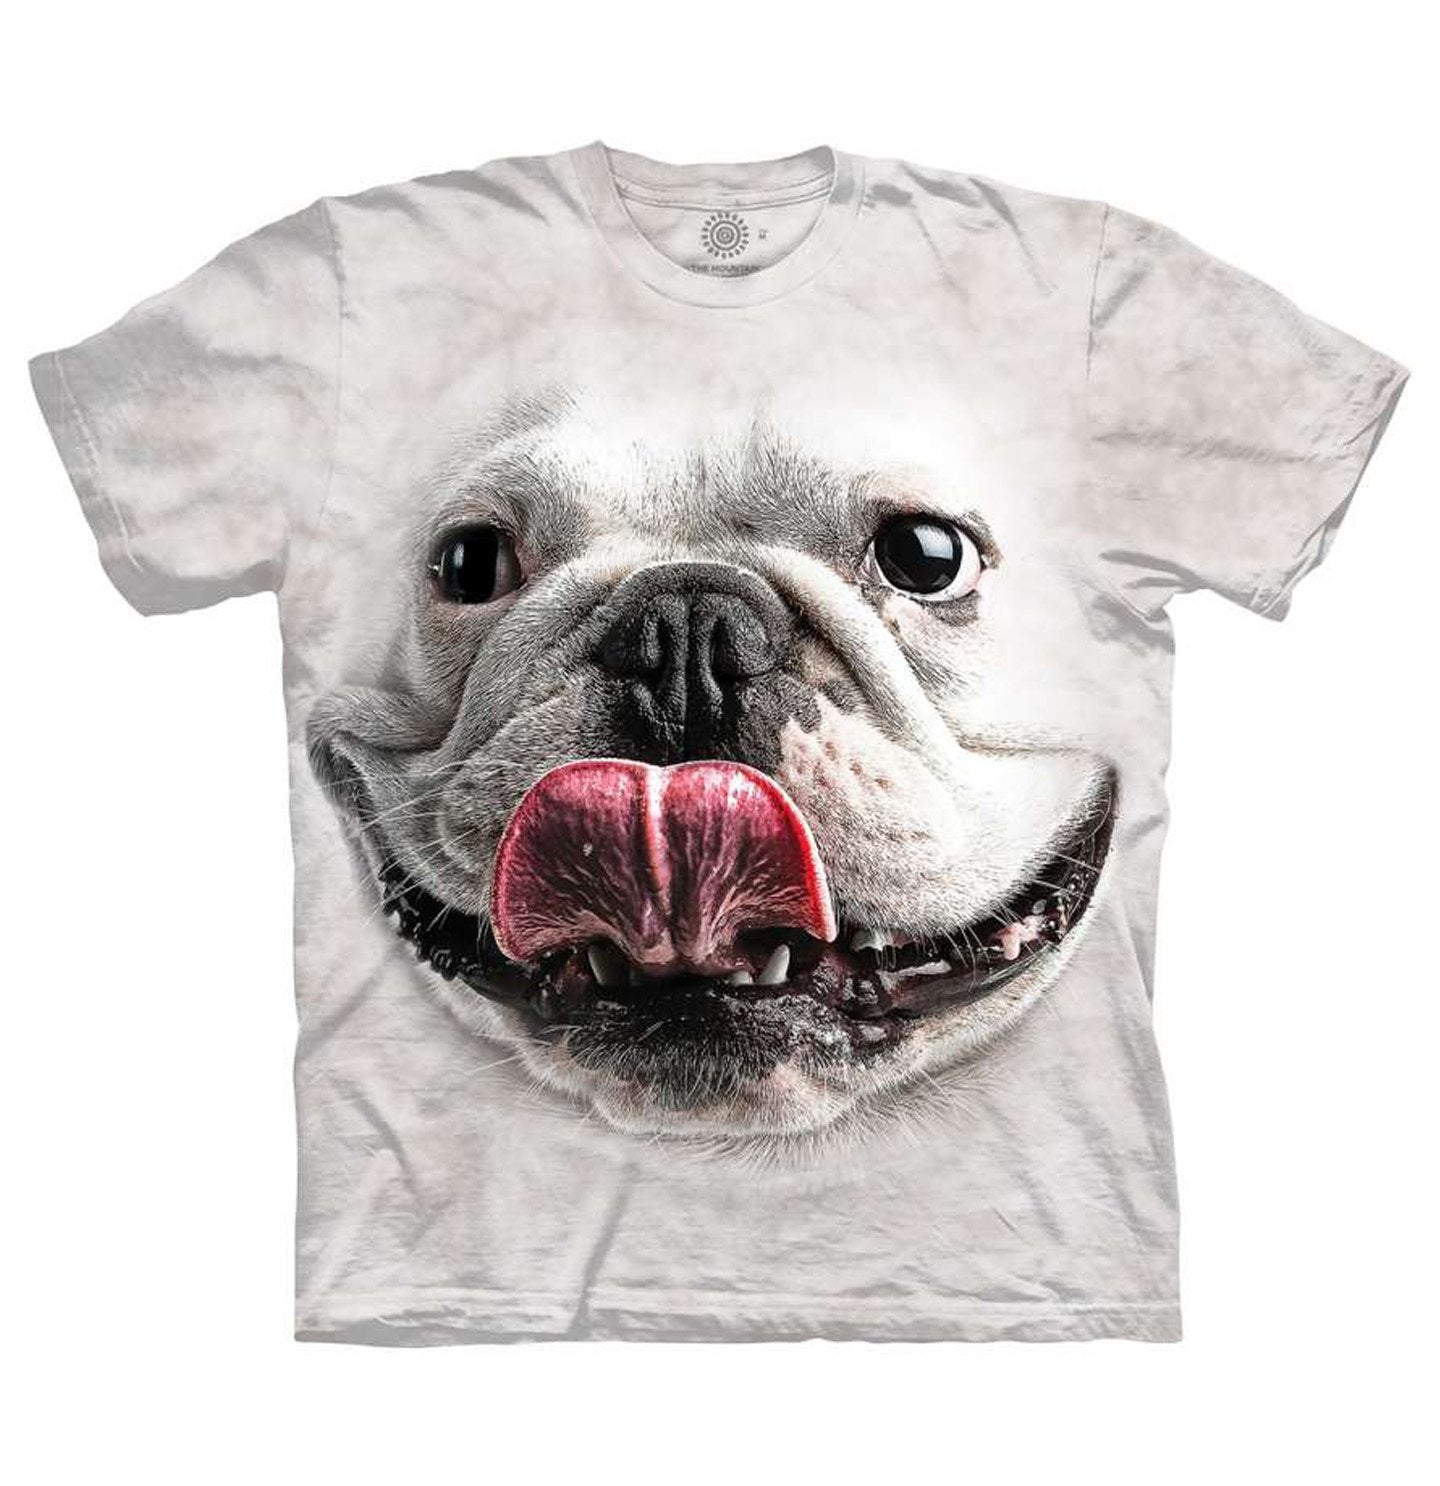 Animal Pride - Silly Bulldog Face - Adult Unisex T-Shirt